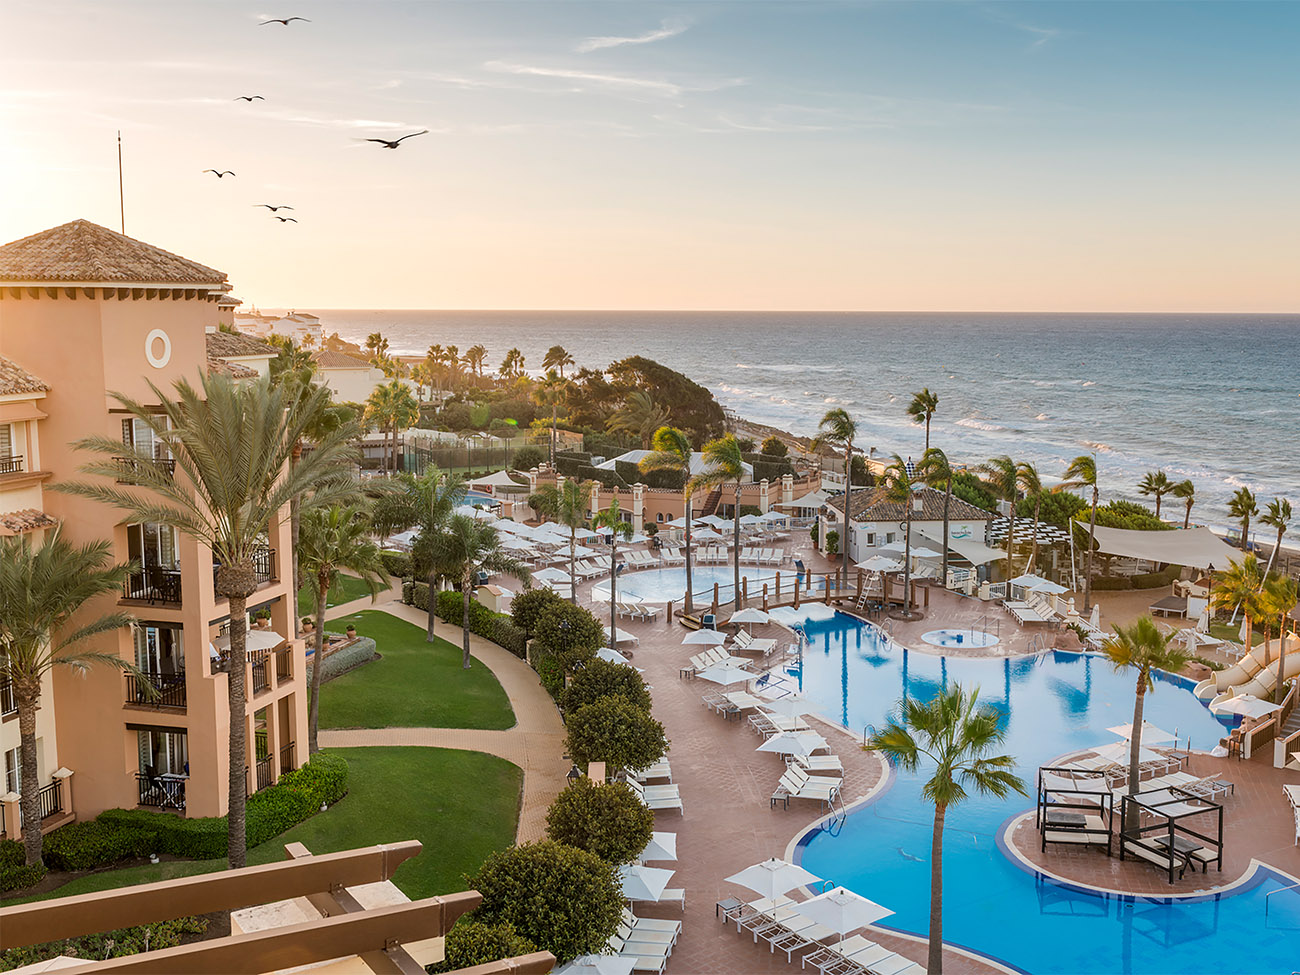 Image of Marriott's Marbella Beach Resort in Marbella.